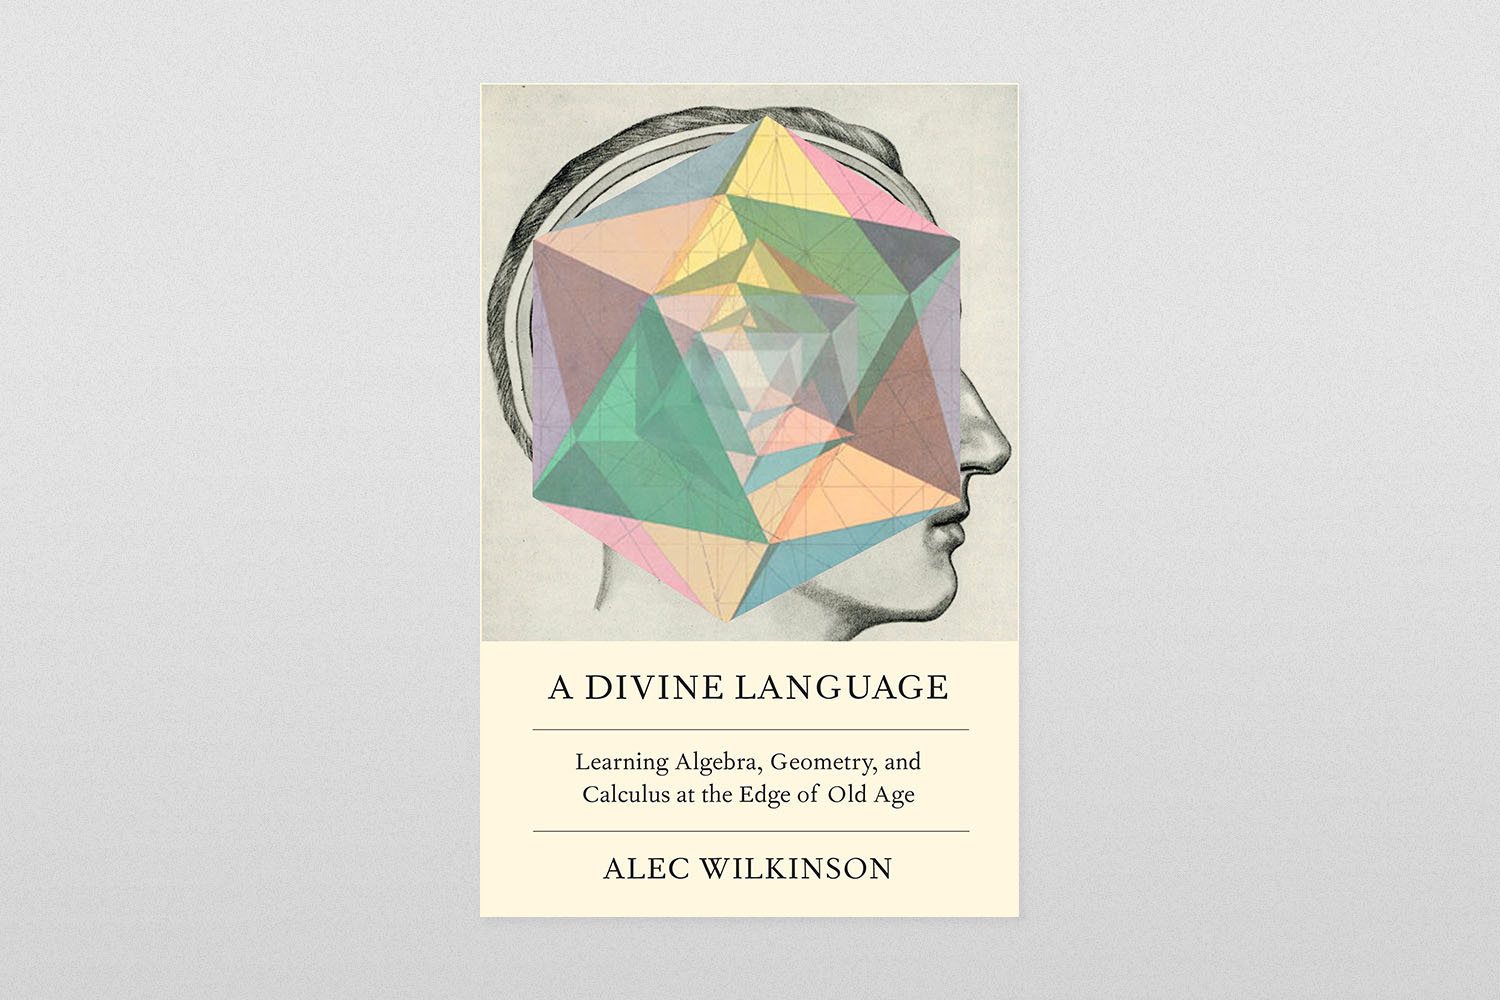 "A Divine Language"